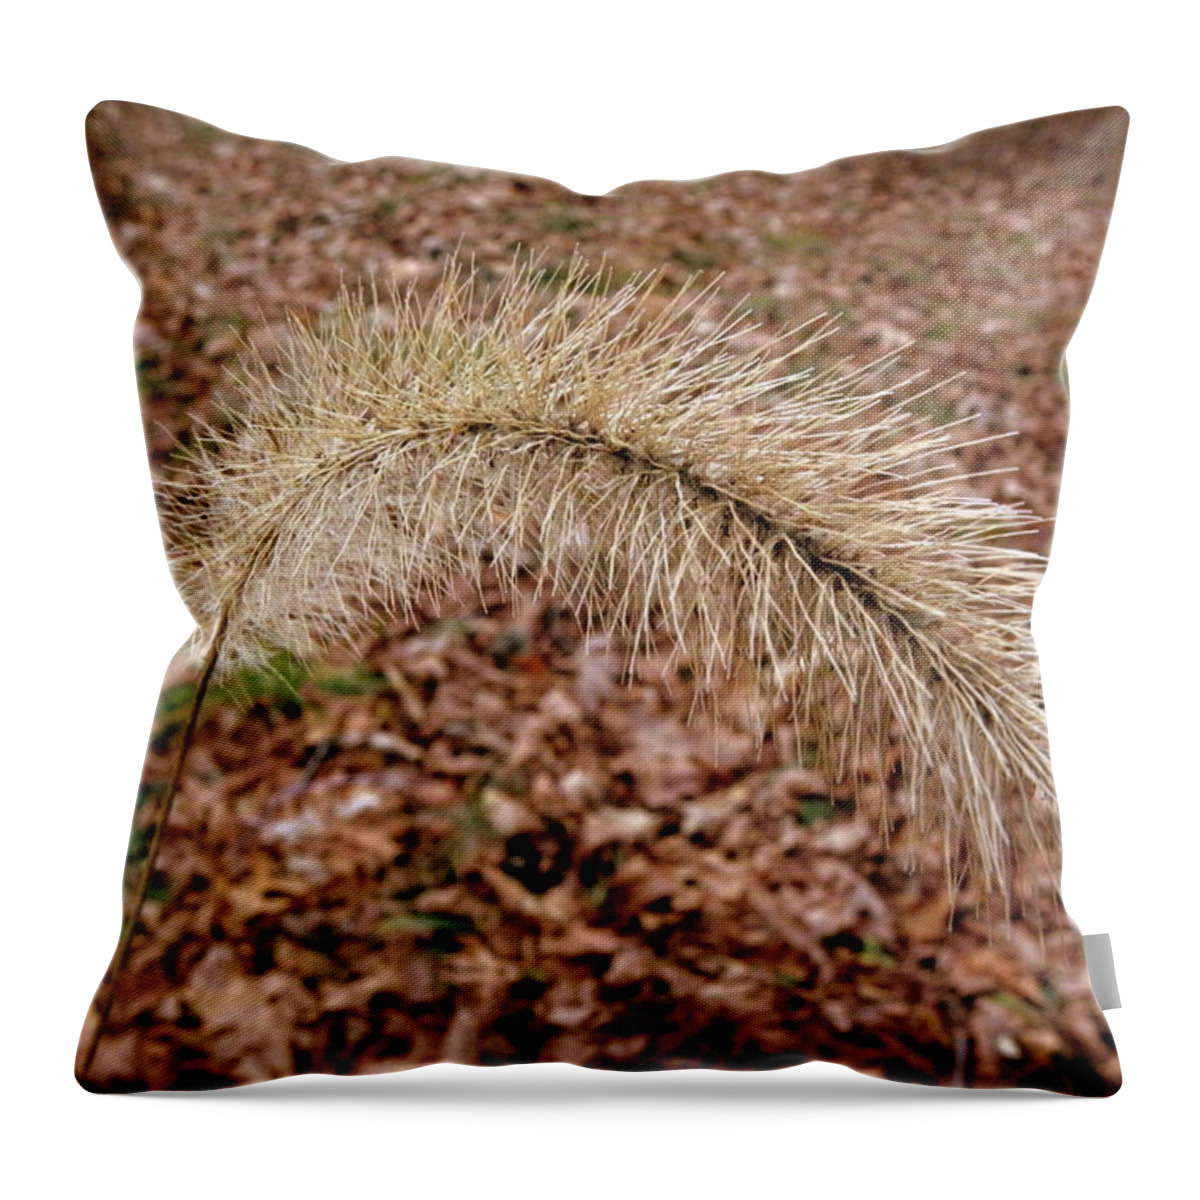 Grassy Throw Pillow featuring the photograph Grass Fuzzy by Kim Galluzzo Wozniak